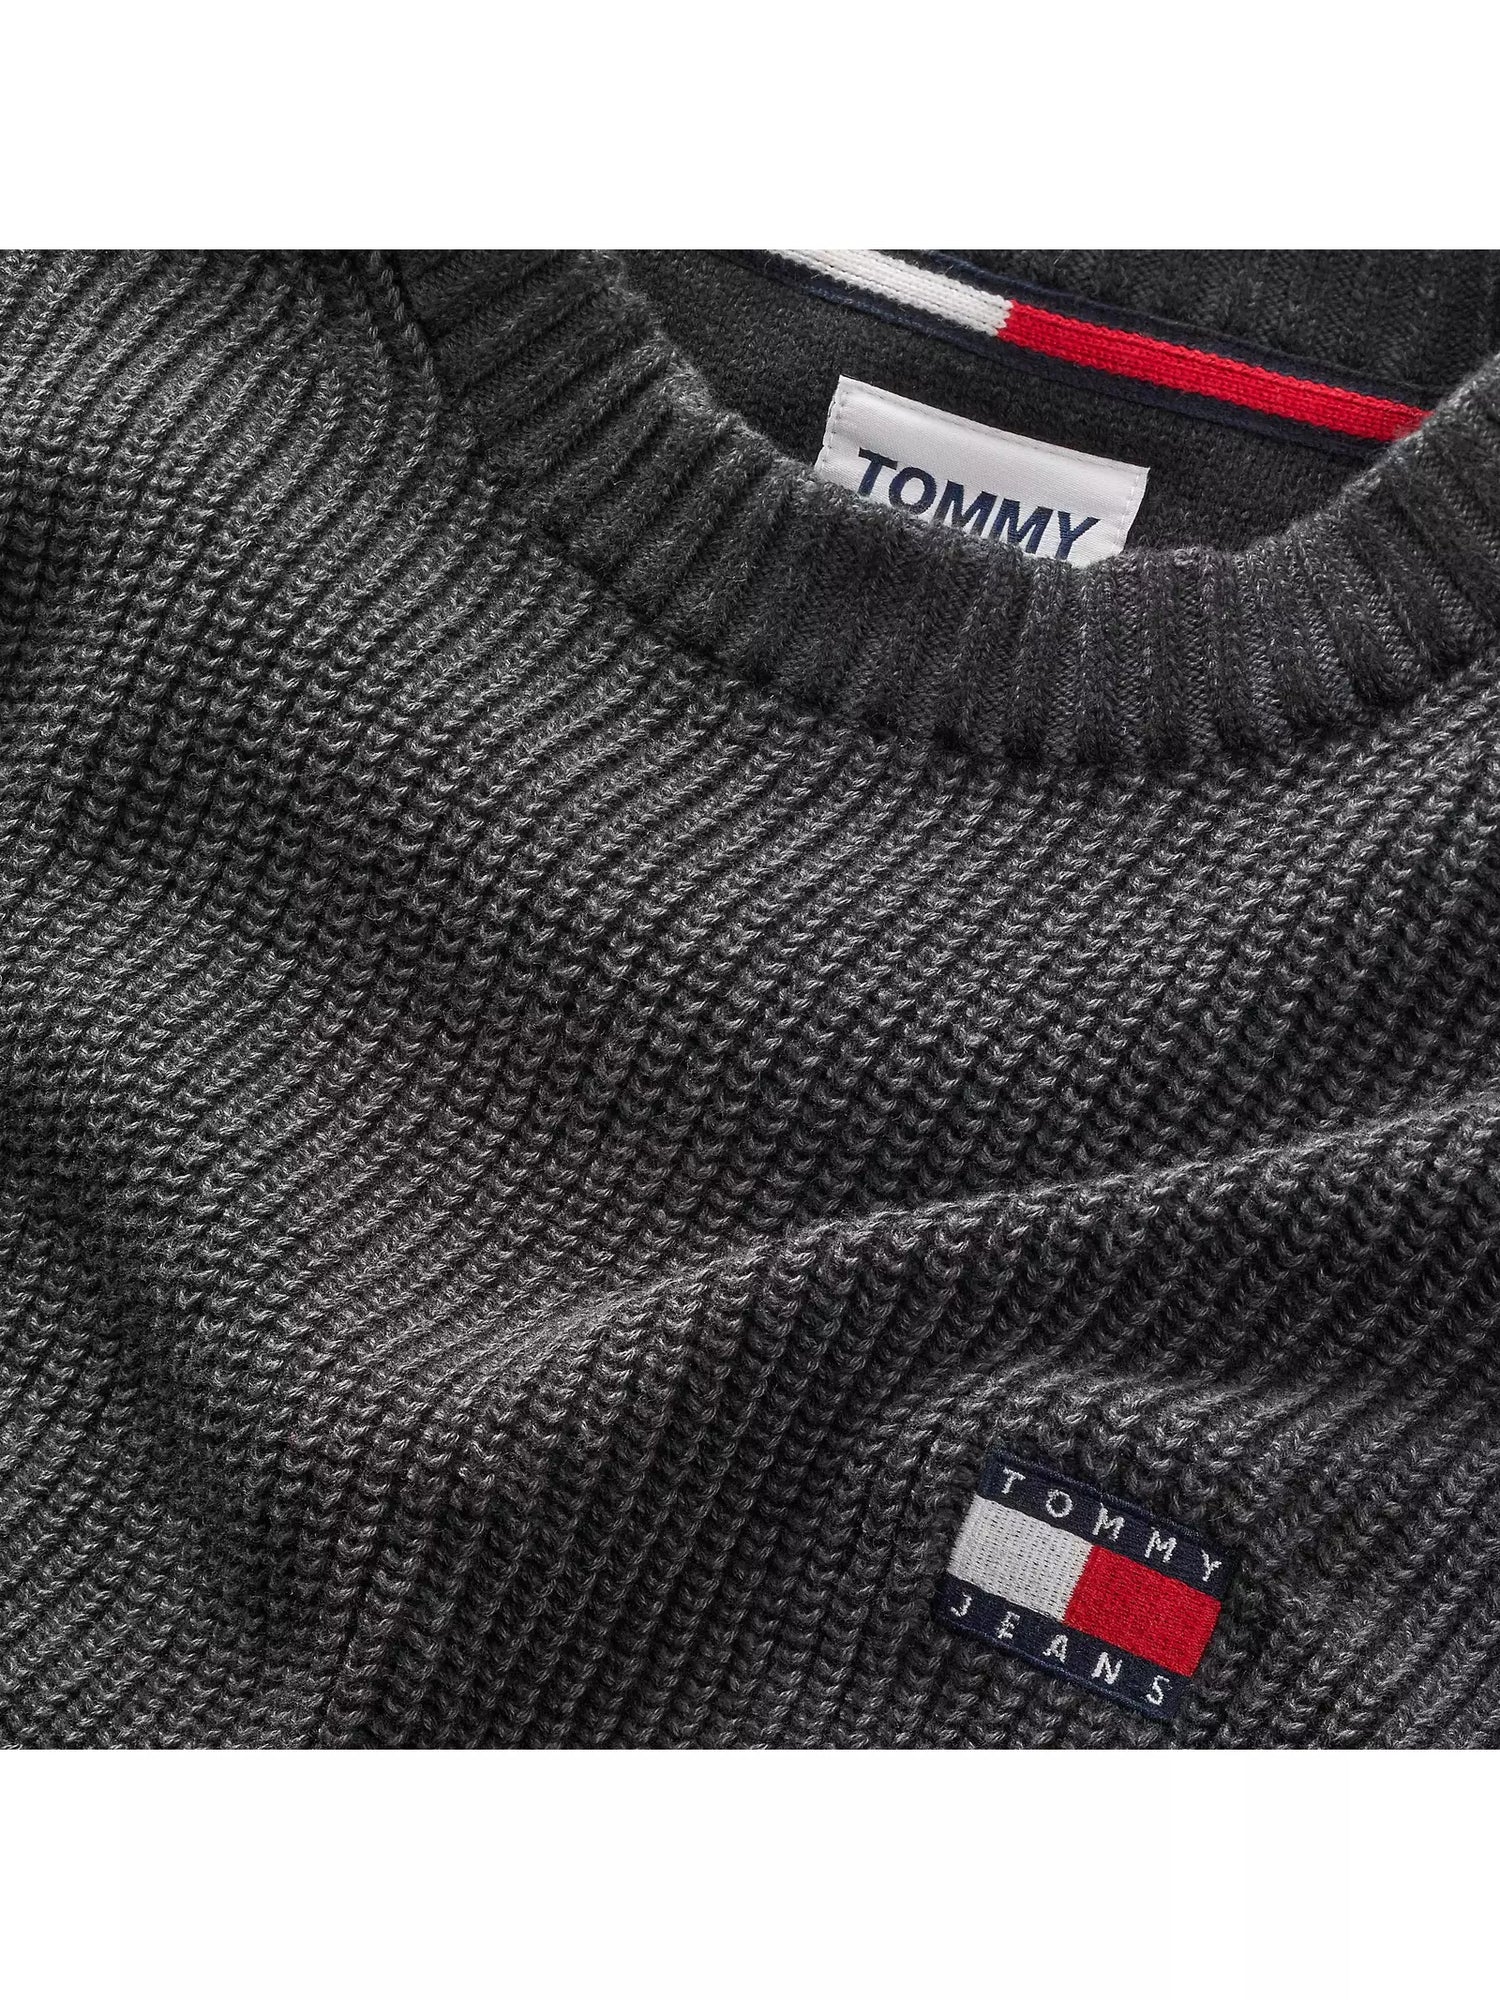 TJM regular tonal XS badge sweater - Black